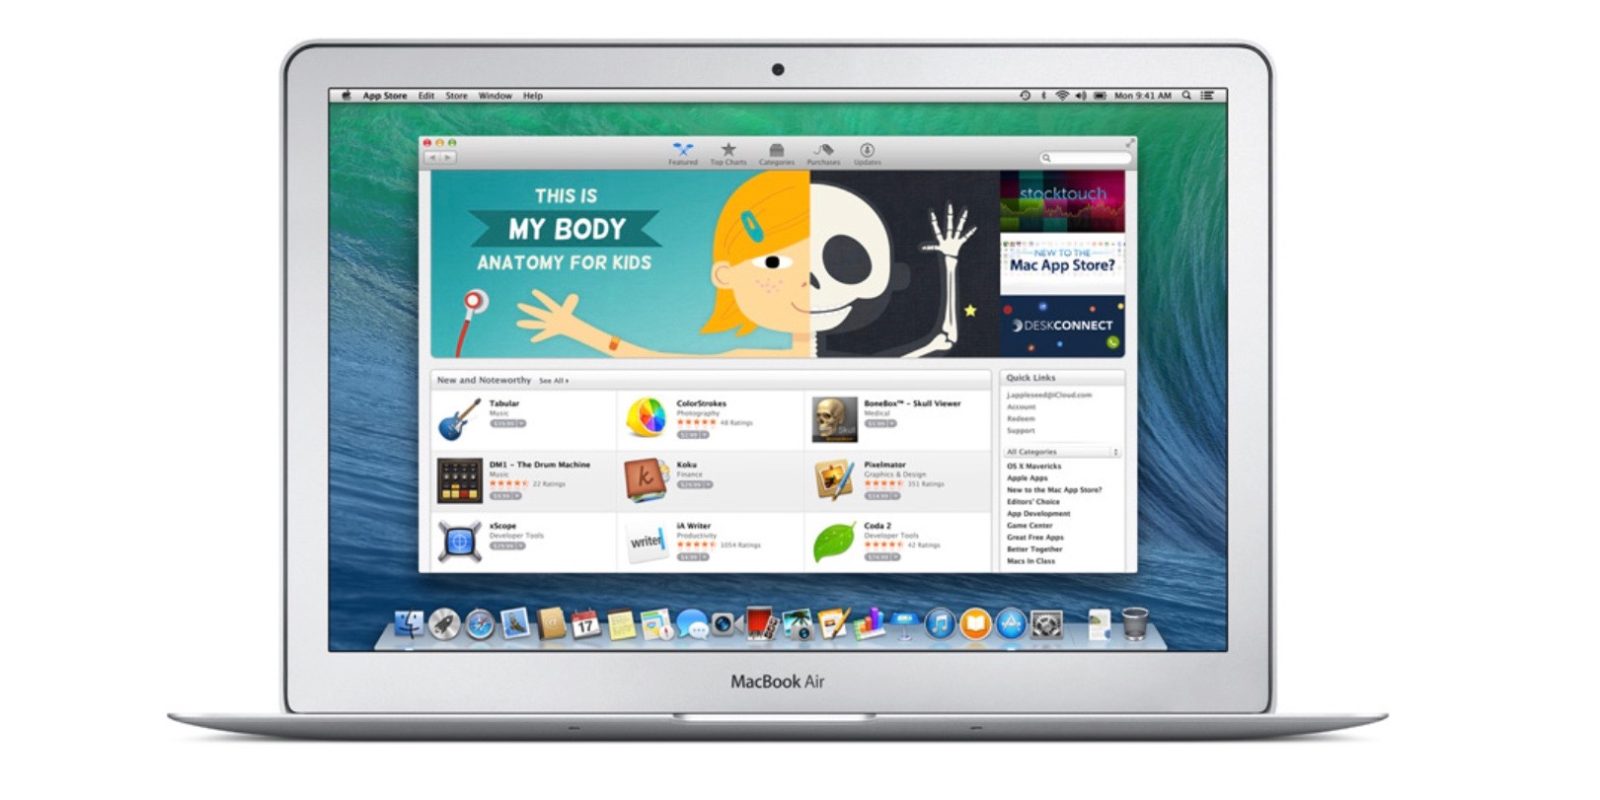 Mac App Store Download For Windows Xp